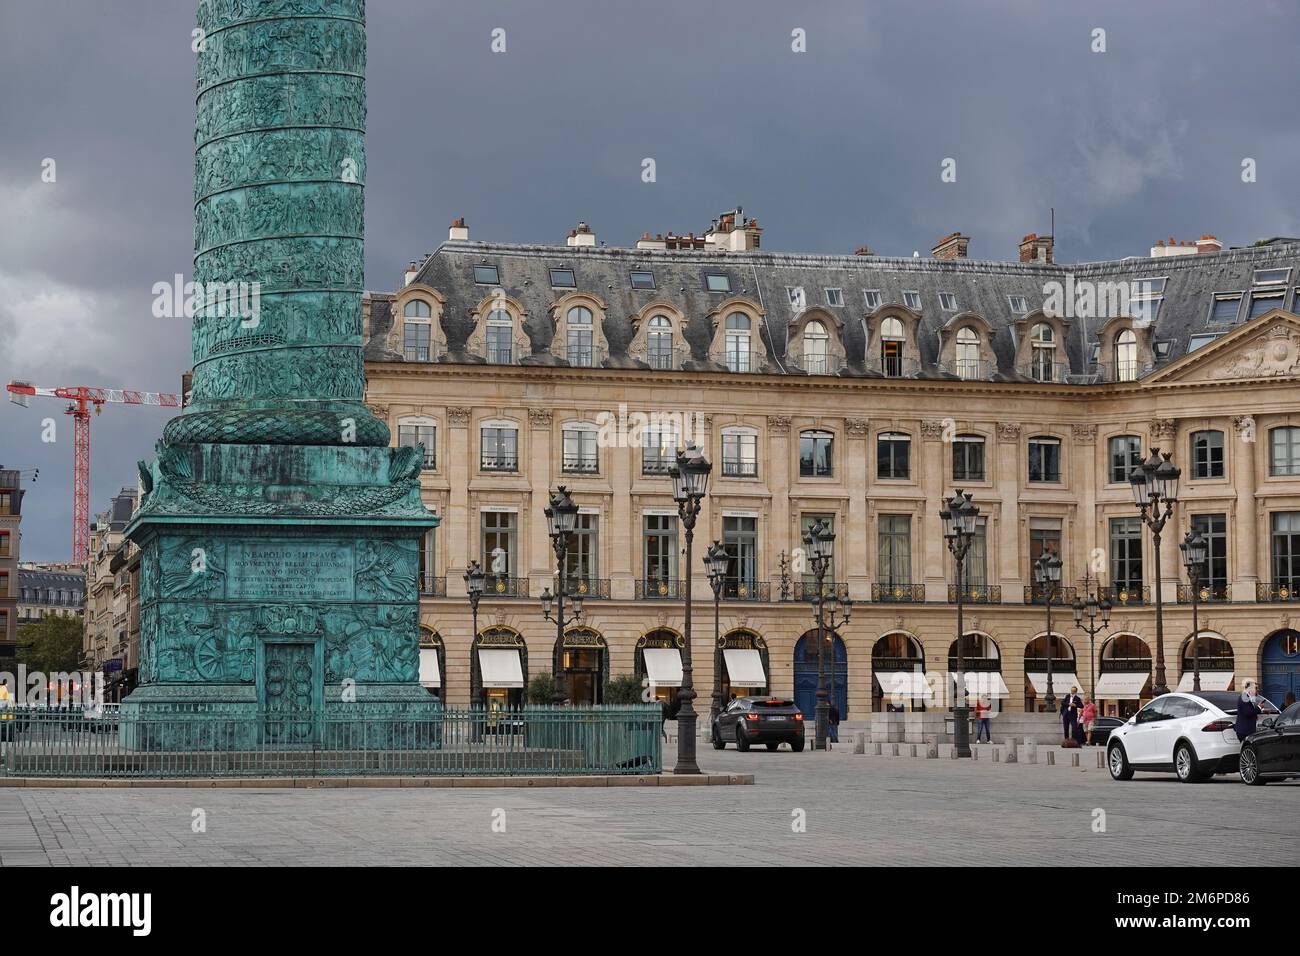 France, Paris, The Place Vendome, in the 1st arrondissement with the Colonne Vendome 1810, celebrating Napoleon's victory at Austerlitz.     Photo © F Stock Photo